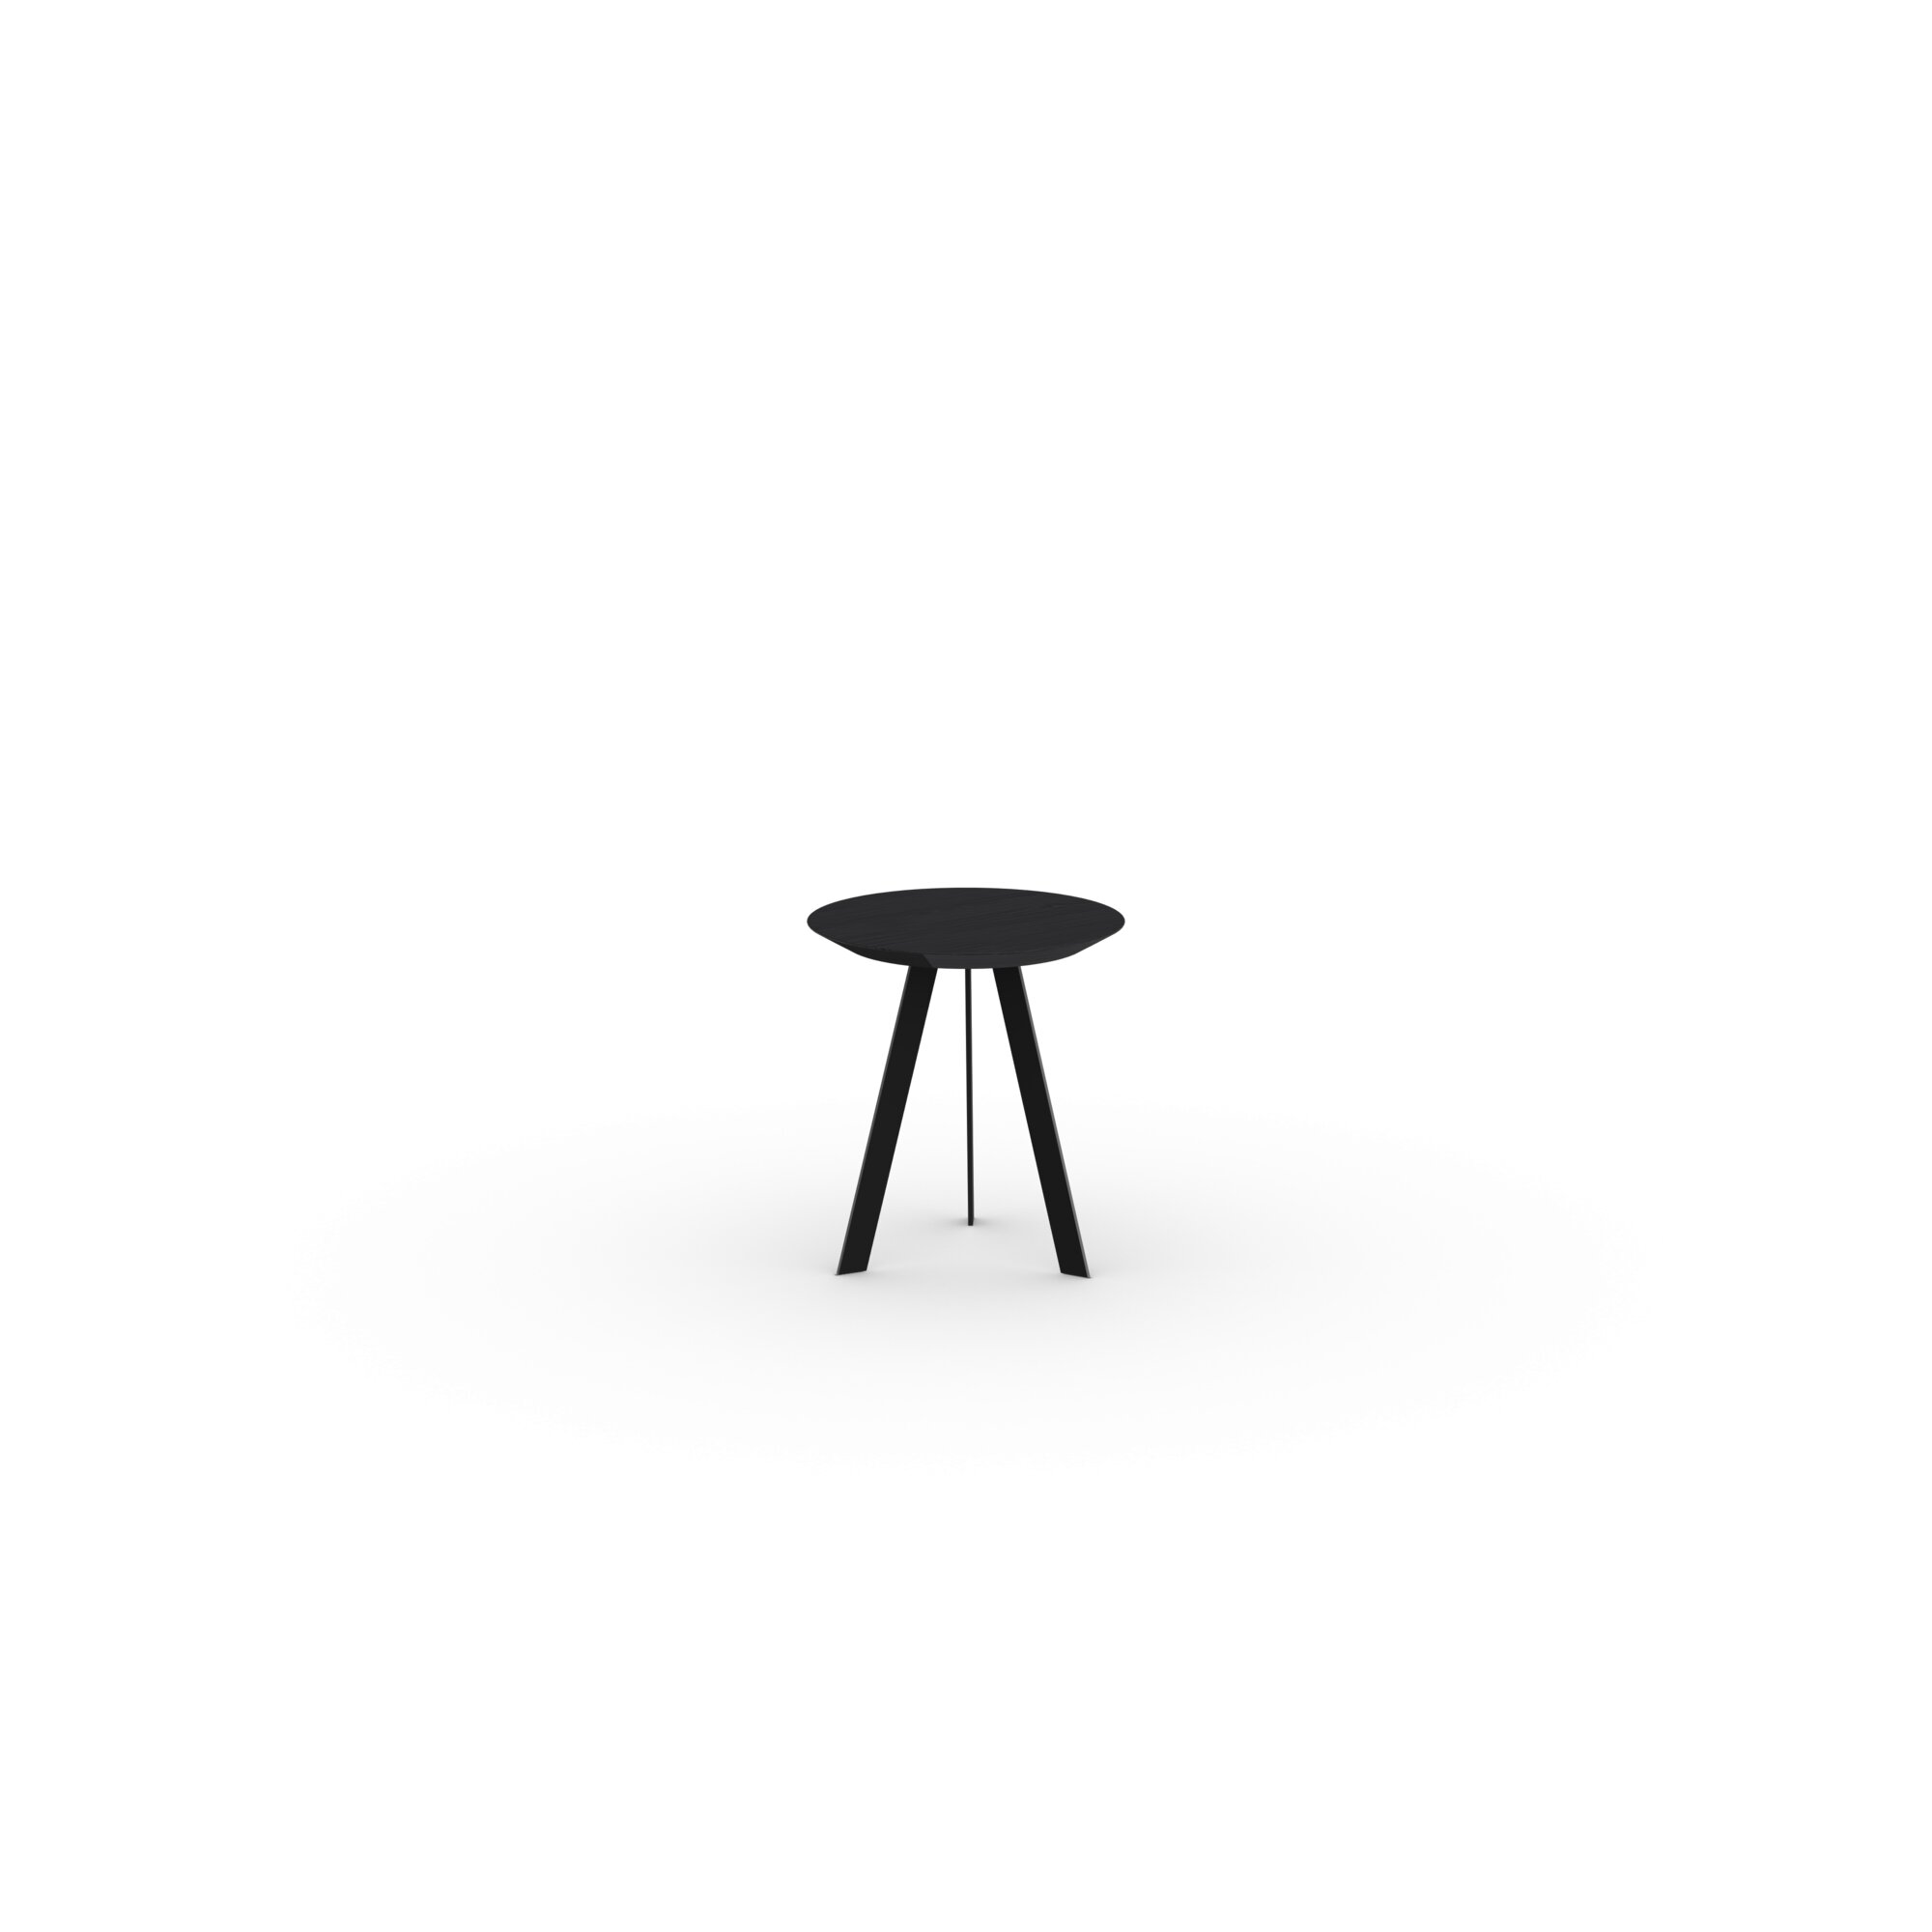 Design Coffee Table | New Co Coffee Table 40 Round Black | Oak black lacquer | Studio HENK| 